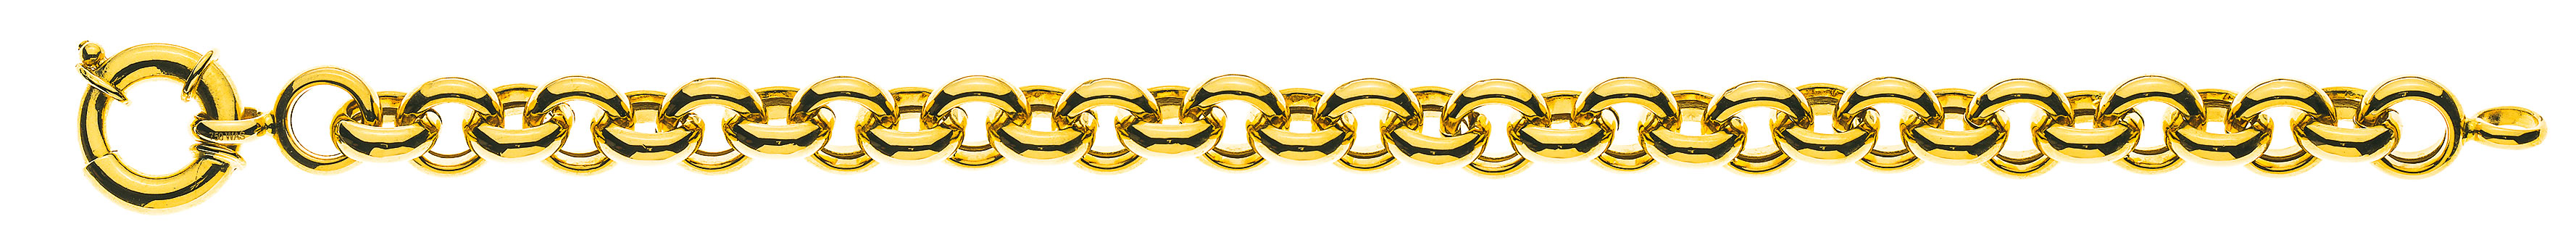 AURONOS Prestige Bracelet 18k yellow gold pea chain 9mm 19cm 